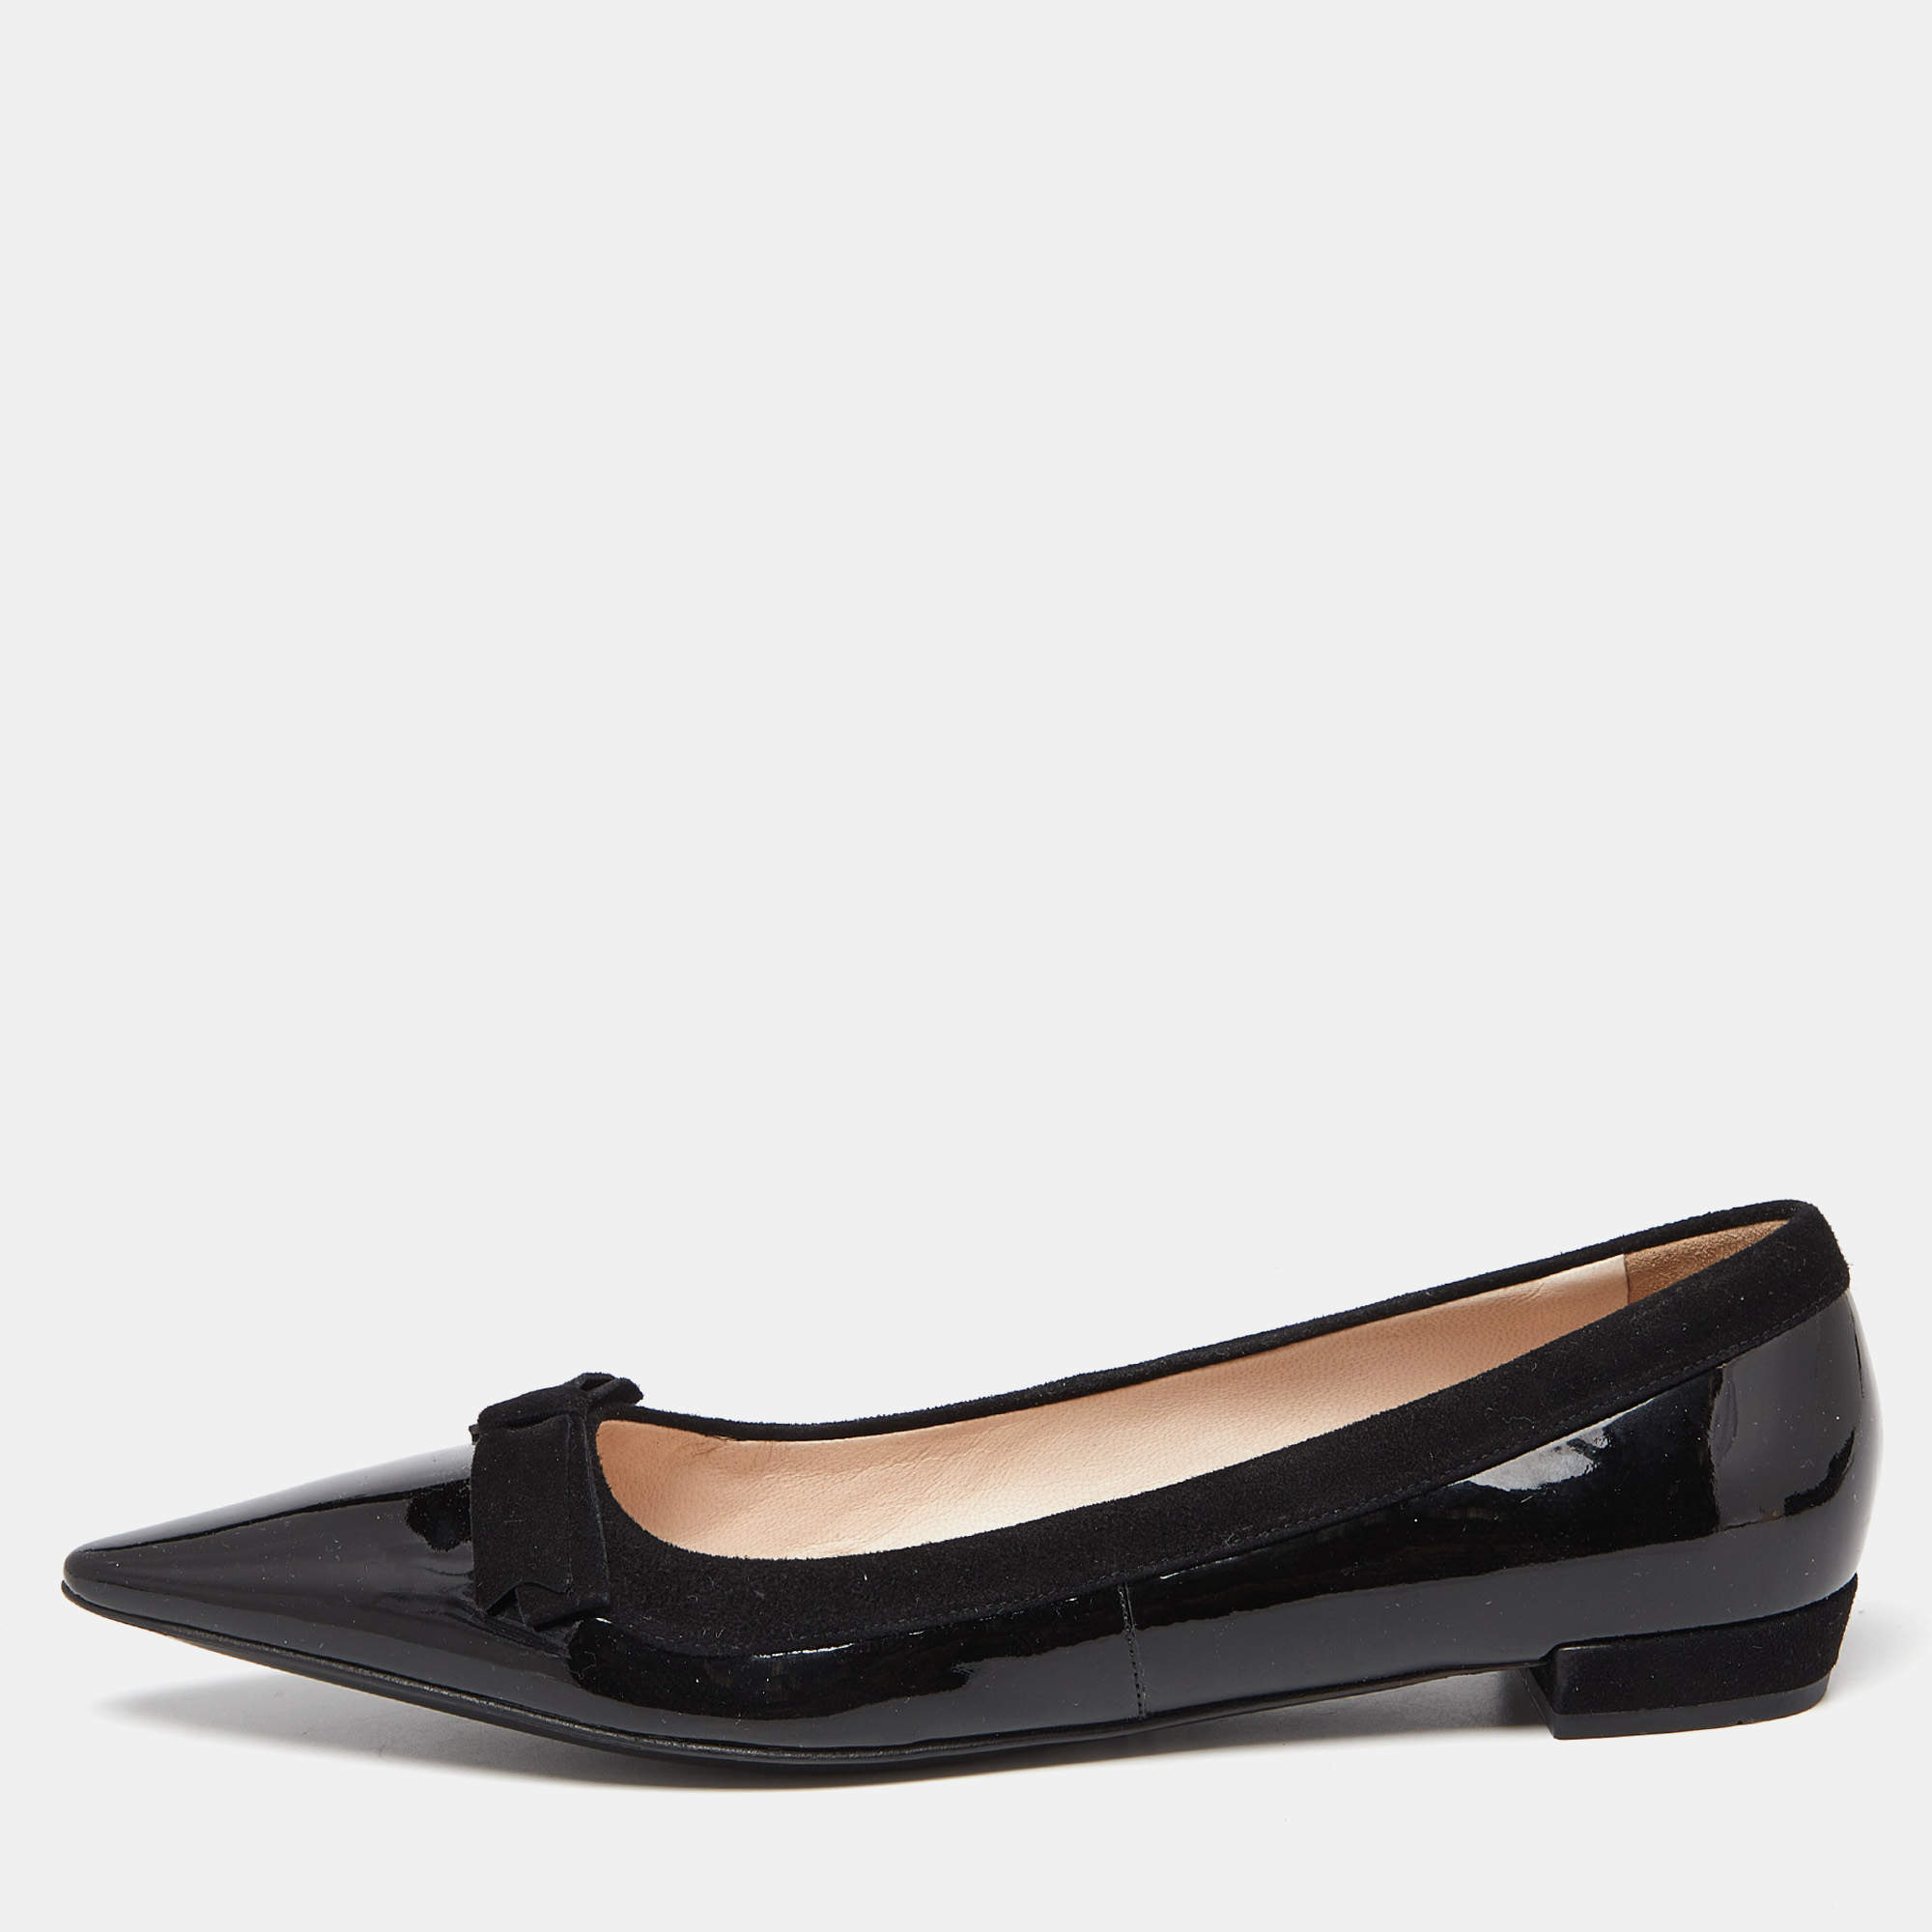 Prada Black Patent Leather Bow Pointed Toe Ballet Flats Size 37.5 Prada ...